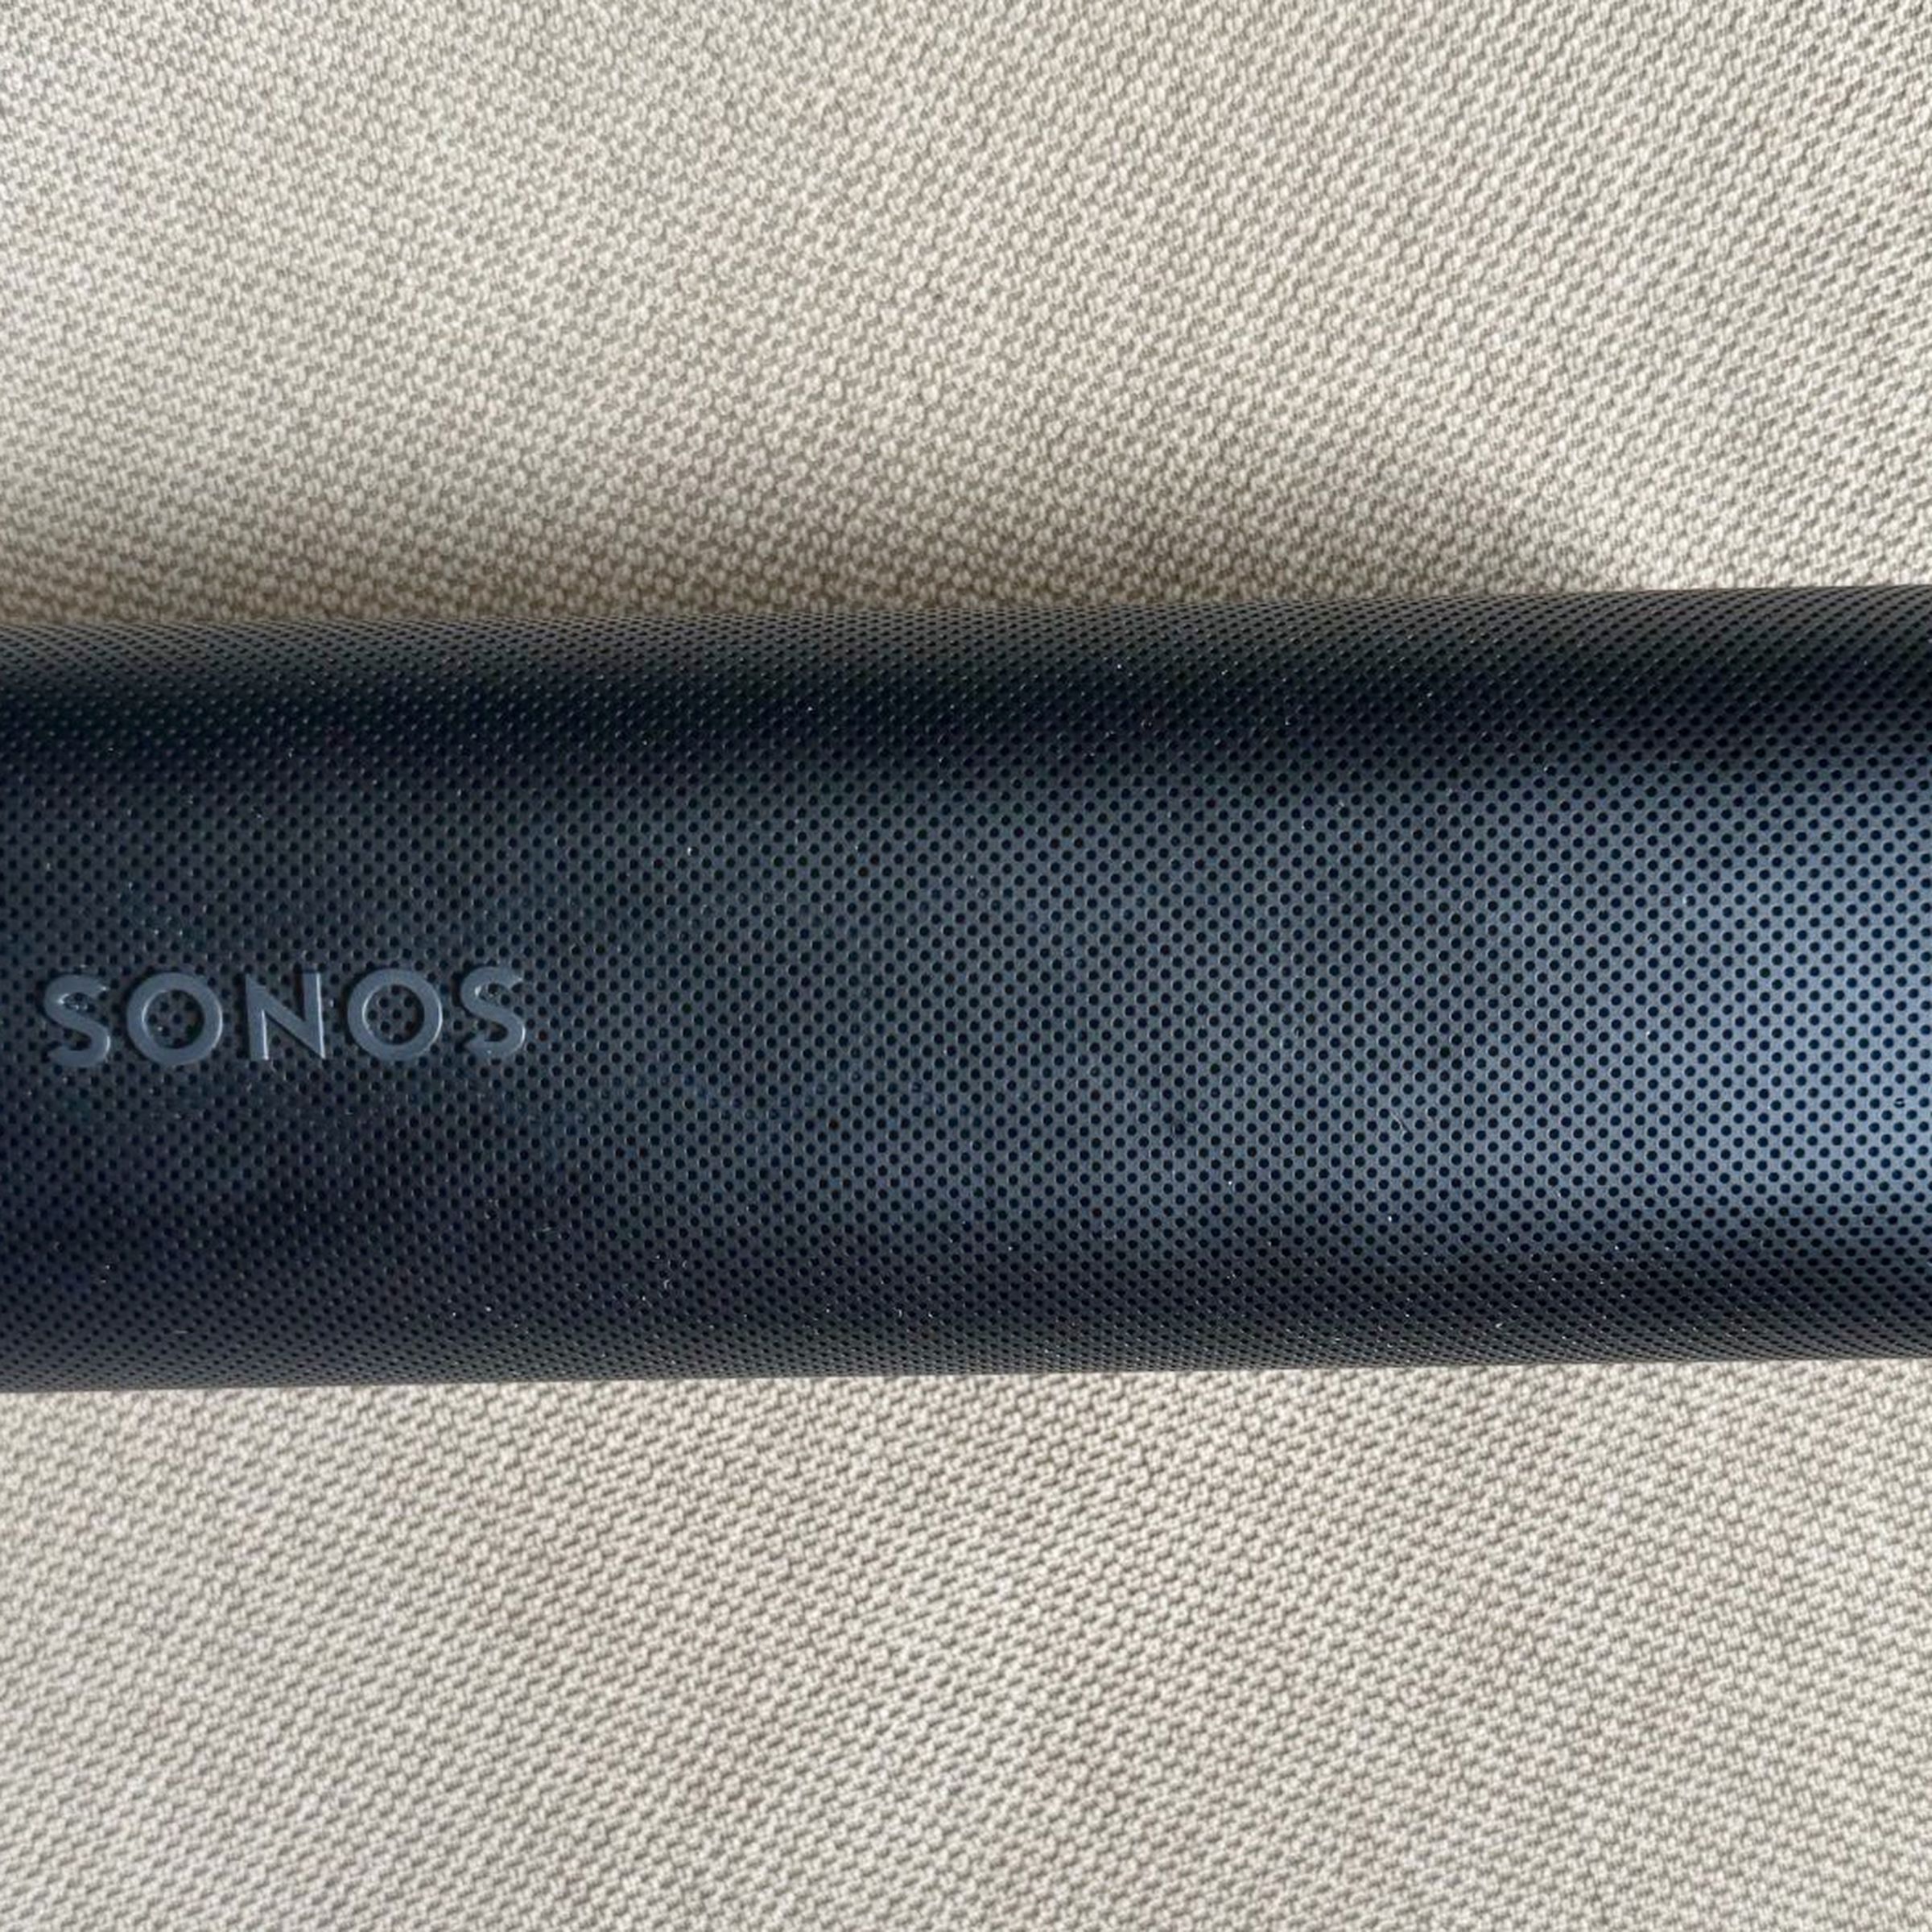 A photo of Sonos’ upcoming Roam 2 speaker in black.